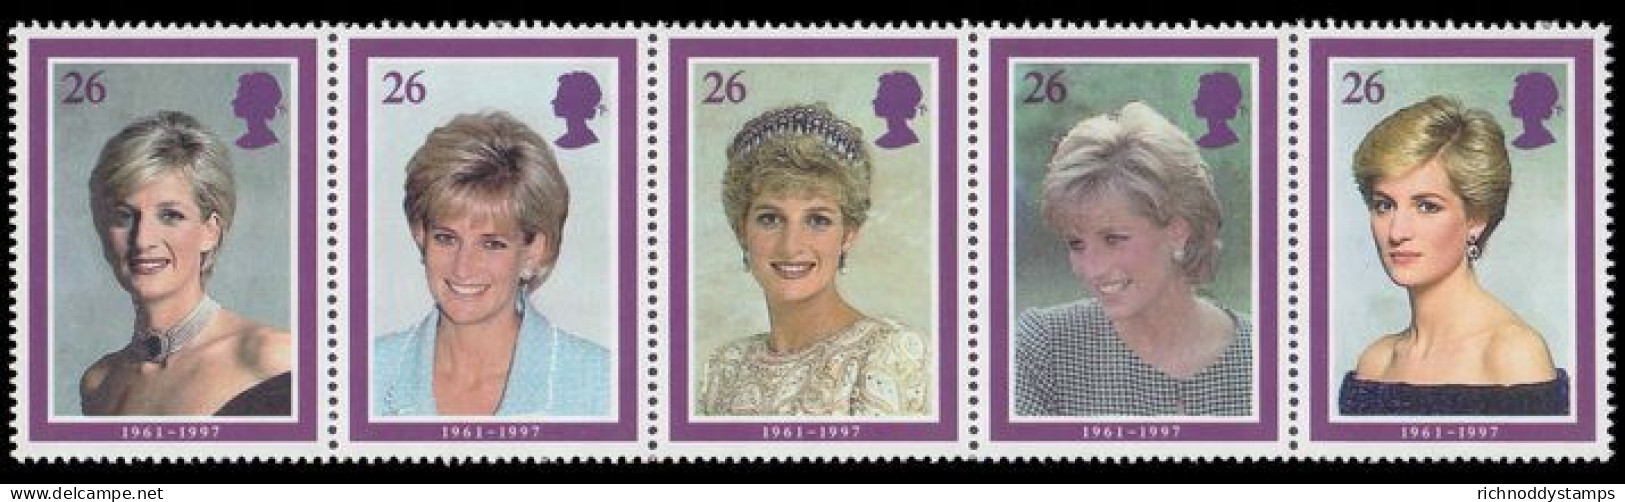 1998 Diana, Princess Of Wales Unmounted Mint. - Nuevos